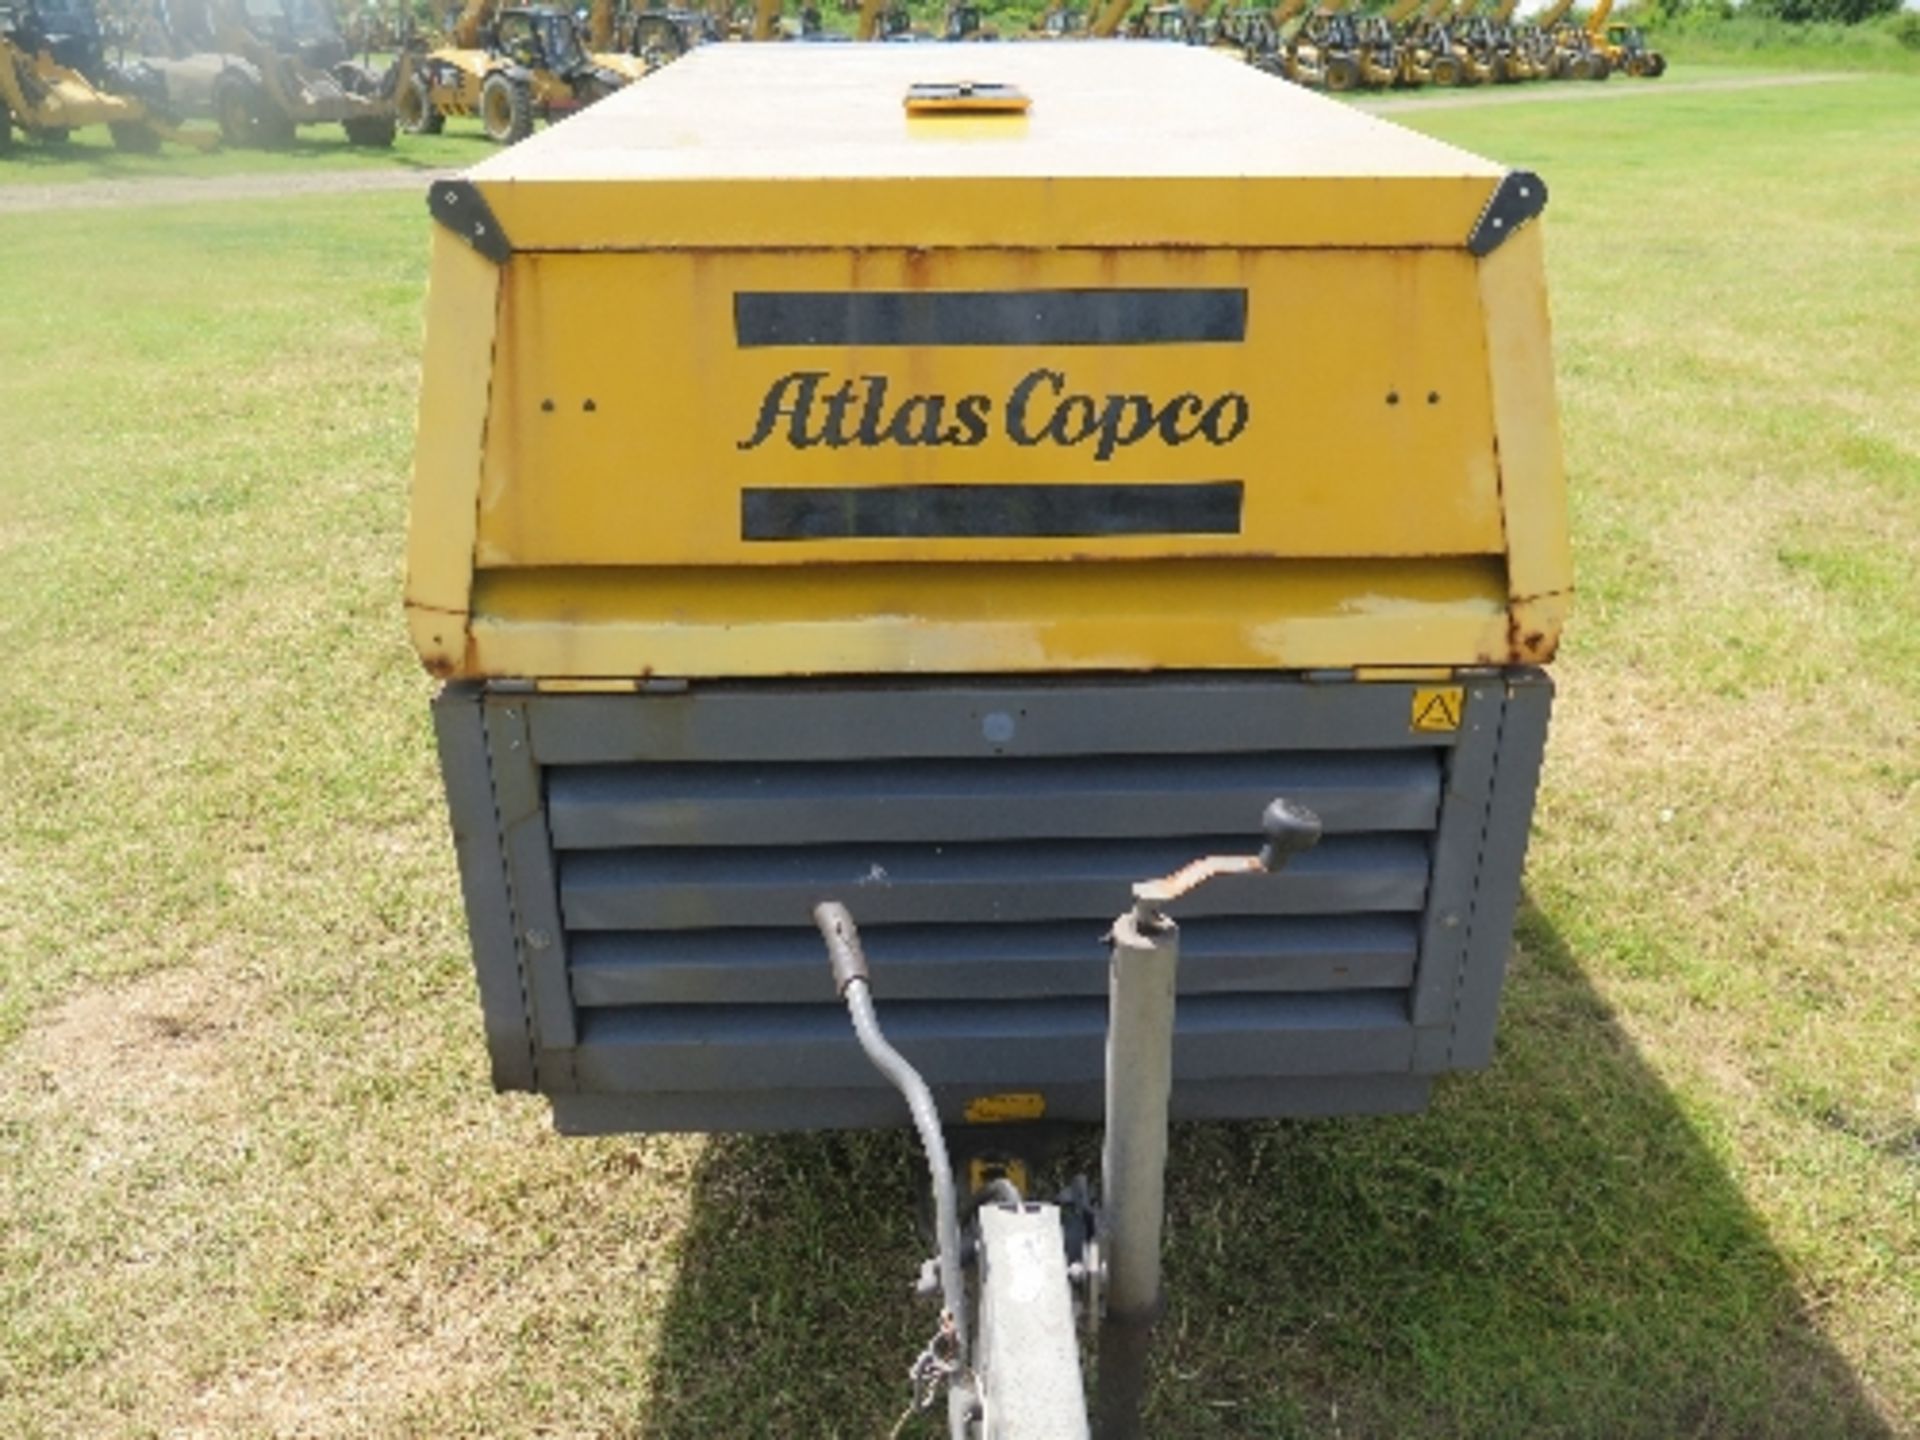 Atlas Copco XAS137 compressor 2008 5002572
1,983 HOURS - DEUTZ POWER - RUNS AND MAKES AIR
ALL LOTS - Image 2 of 5